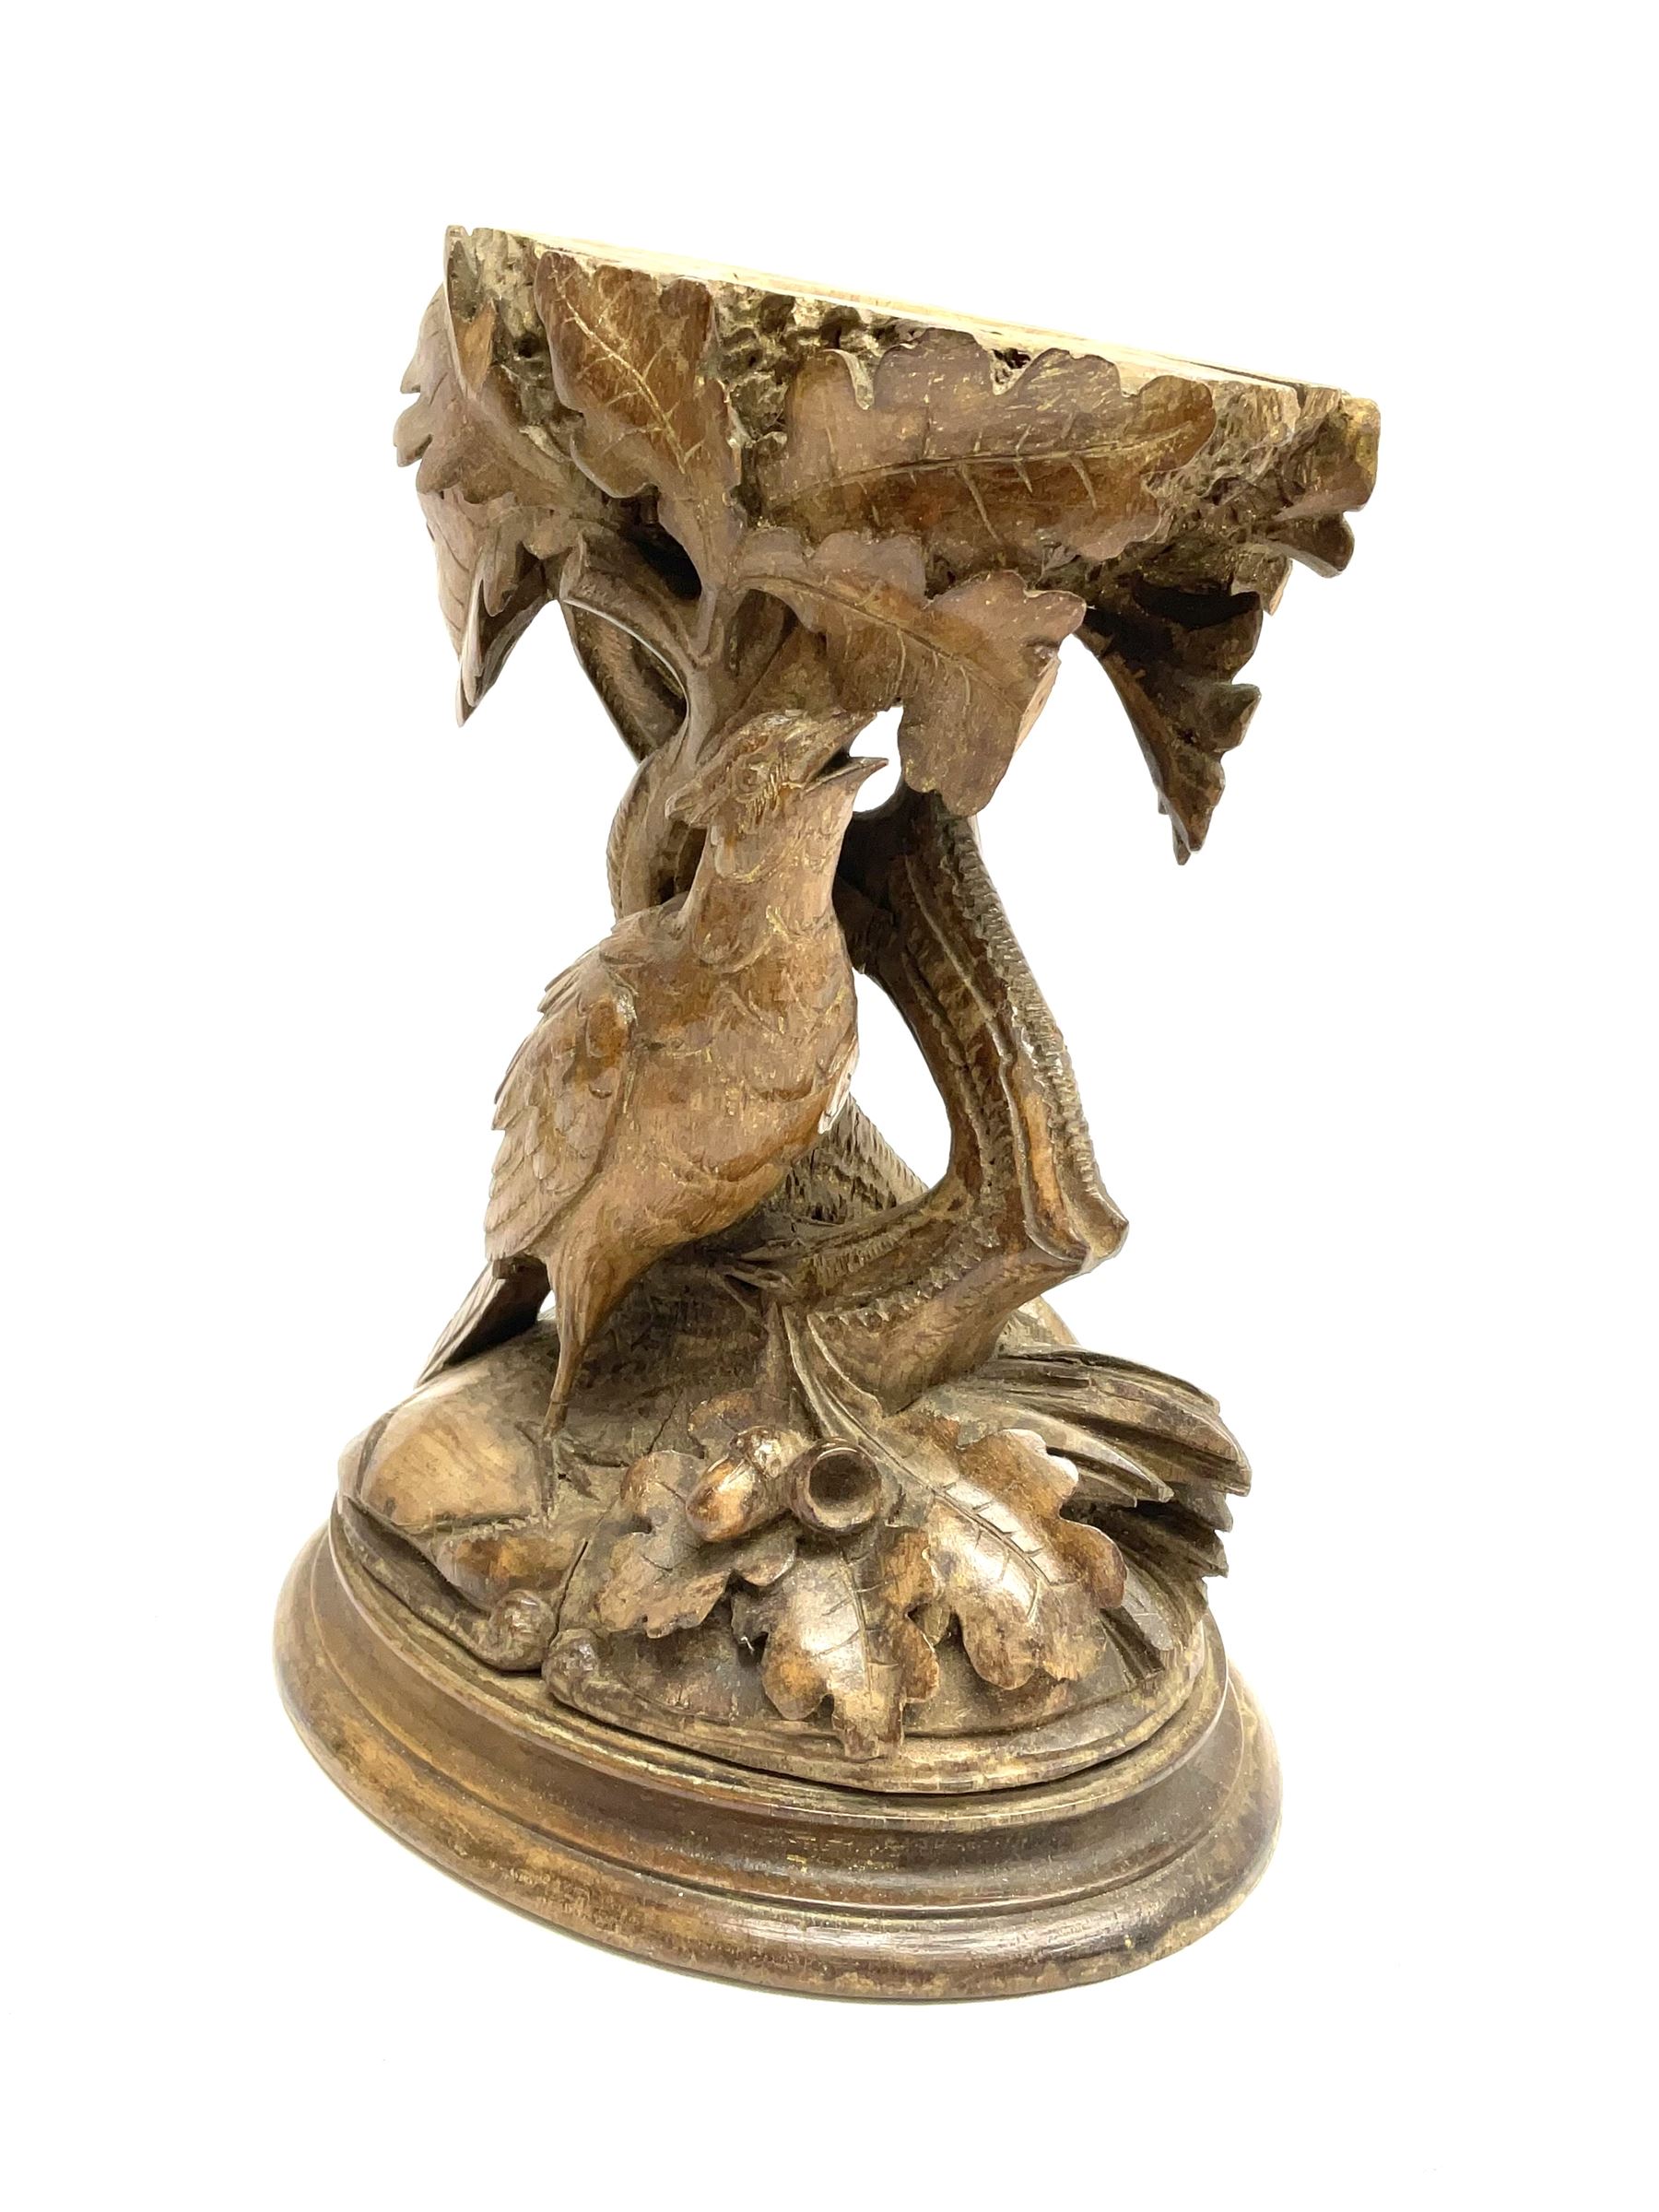 19th century Black Forrest style pedestal